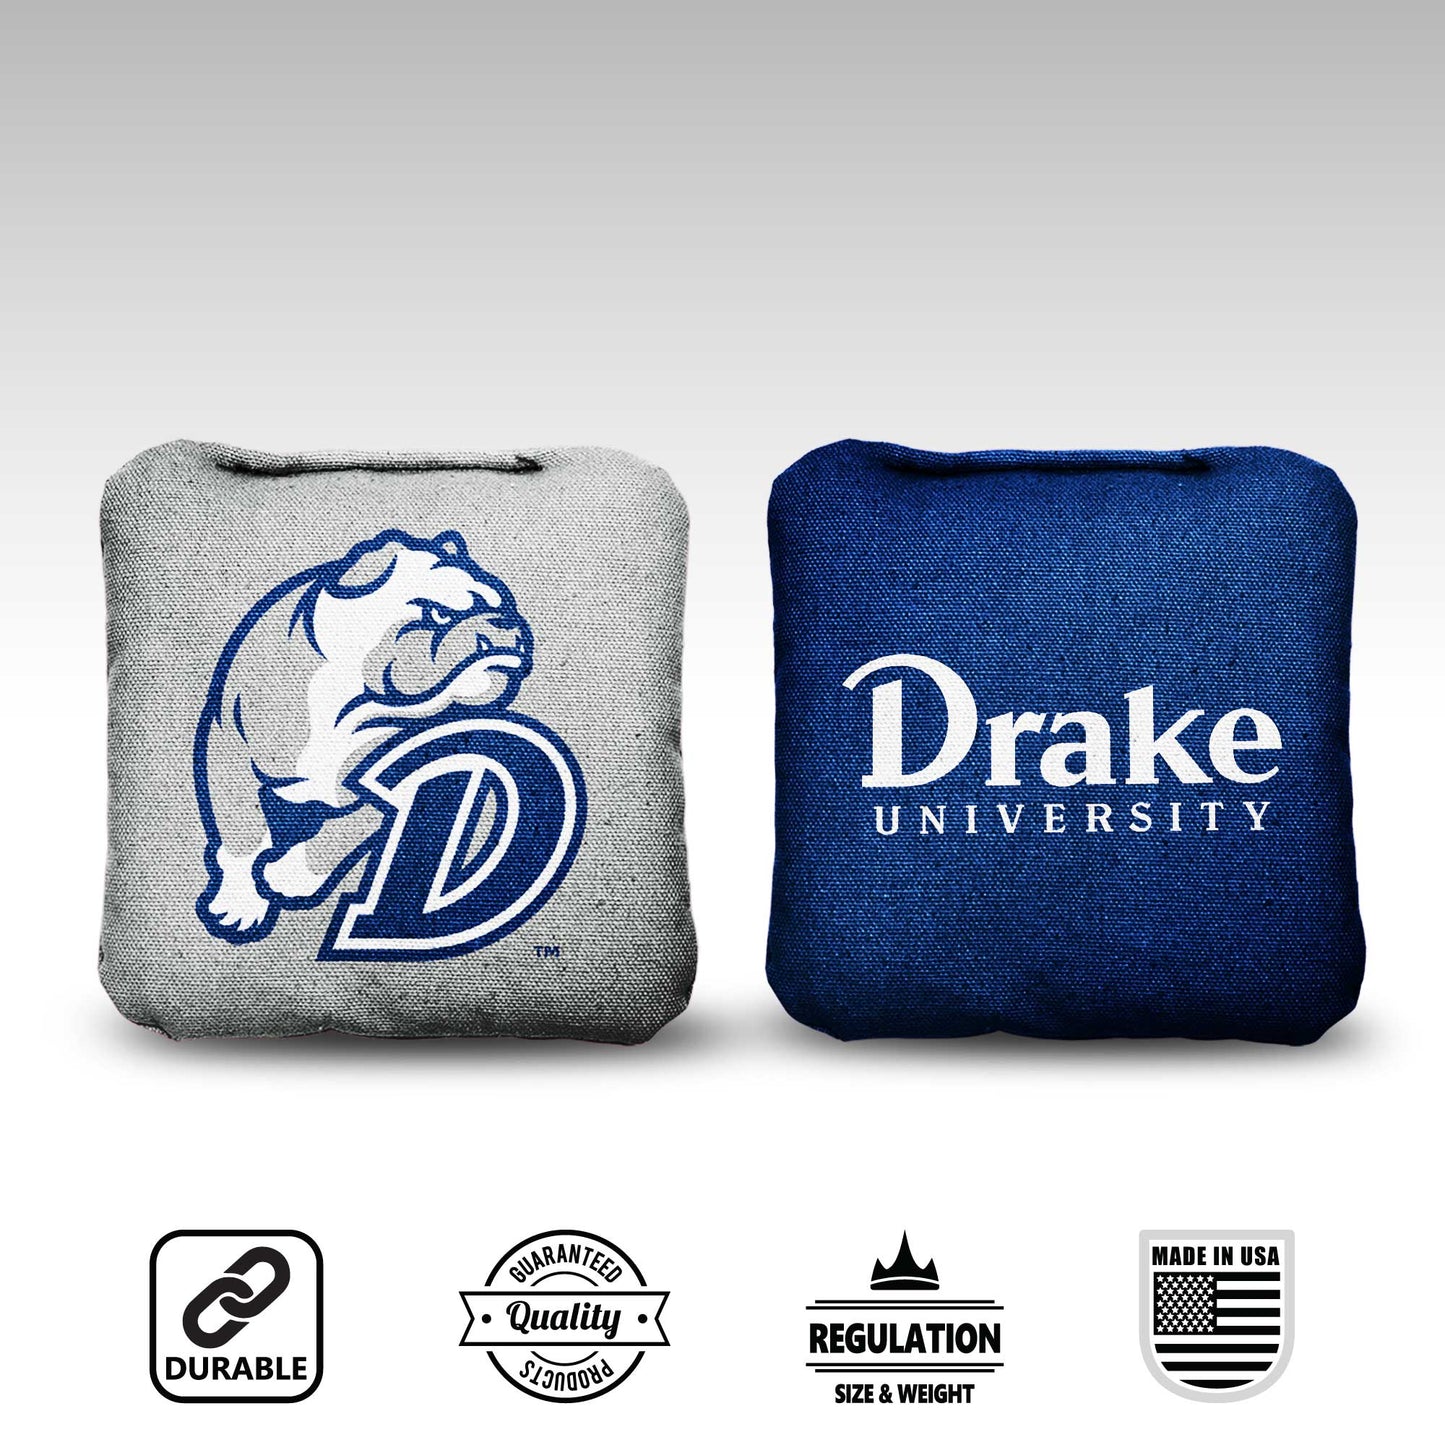 Drake University Cornhole Bags - 8 Cornhole Bags